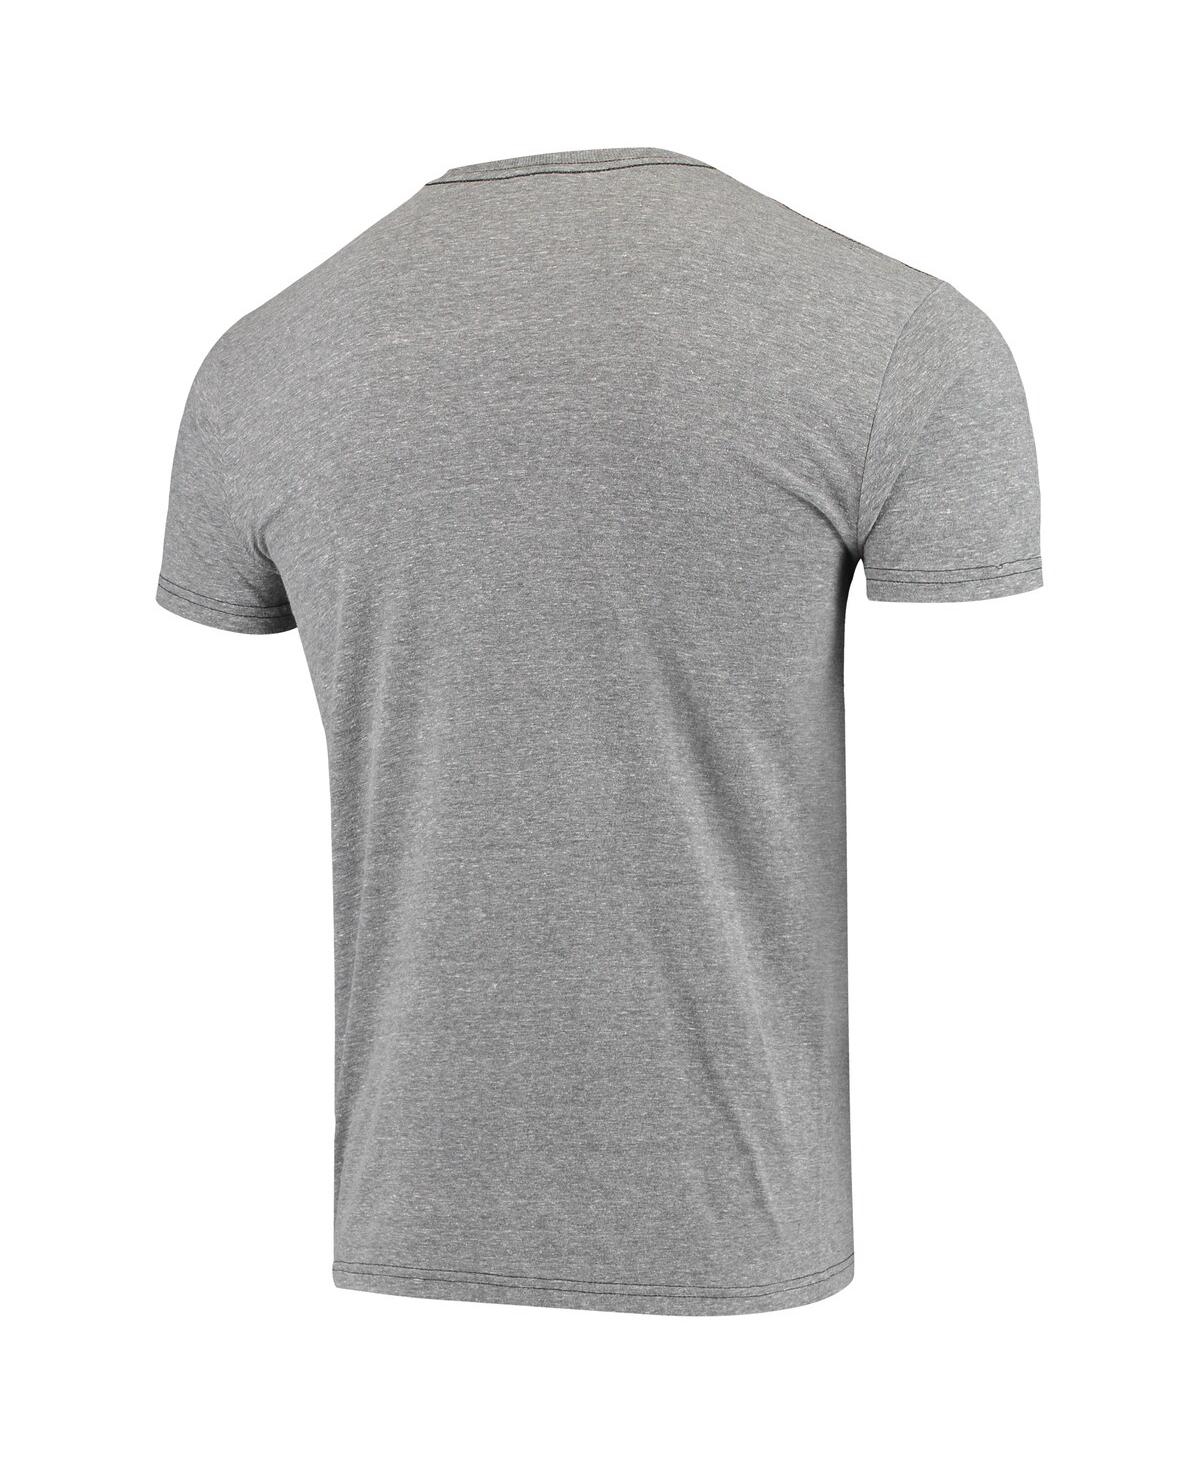 Shop Retro Brand Men's Original  Heathered Gray Pitt Panthers Team Vintage-like Tri-blend T-shirt